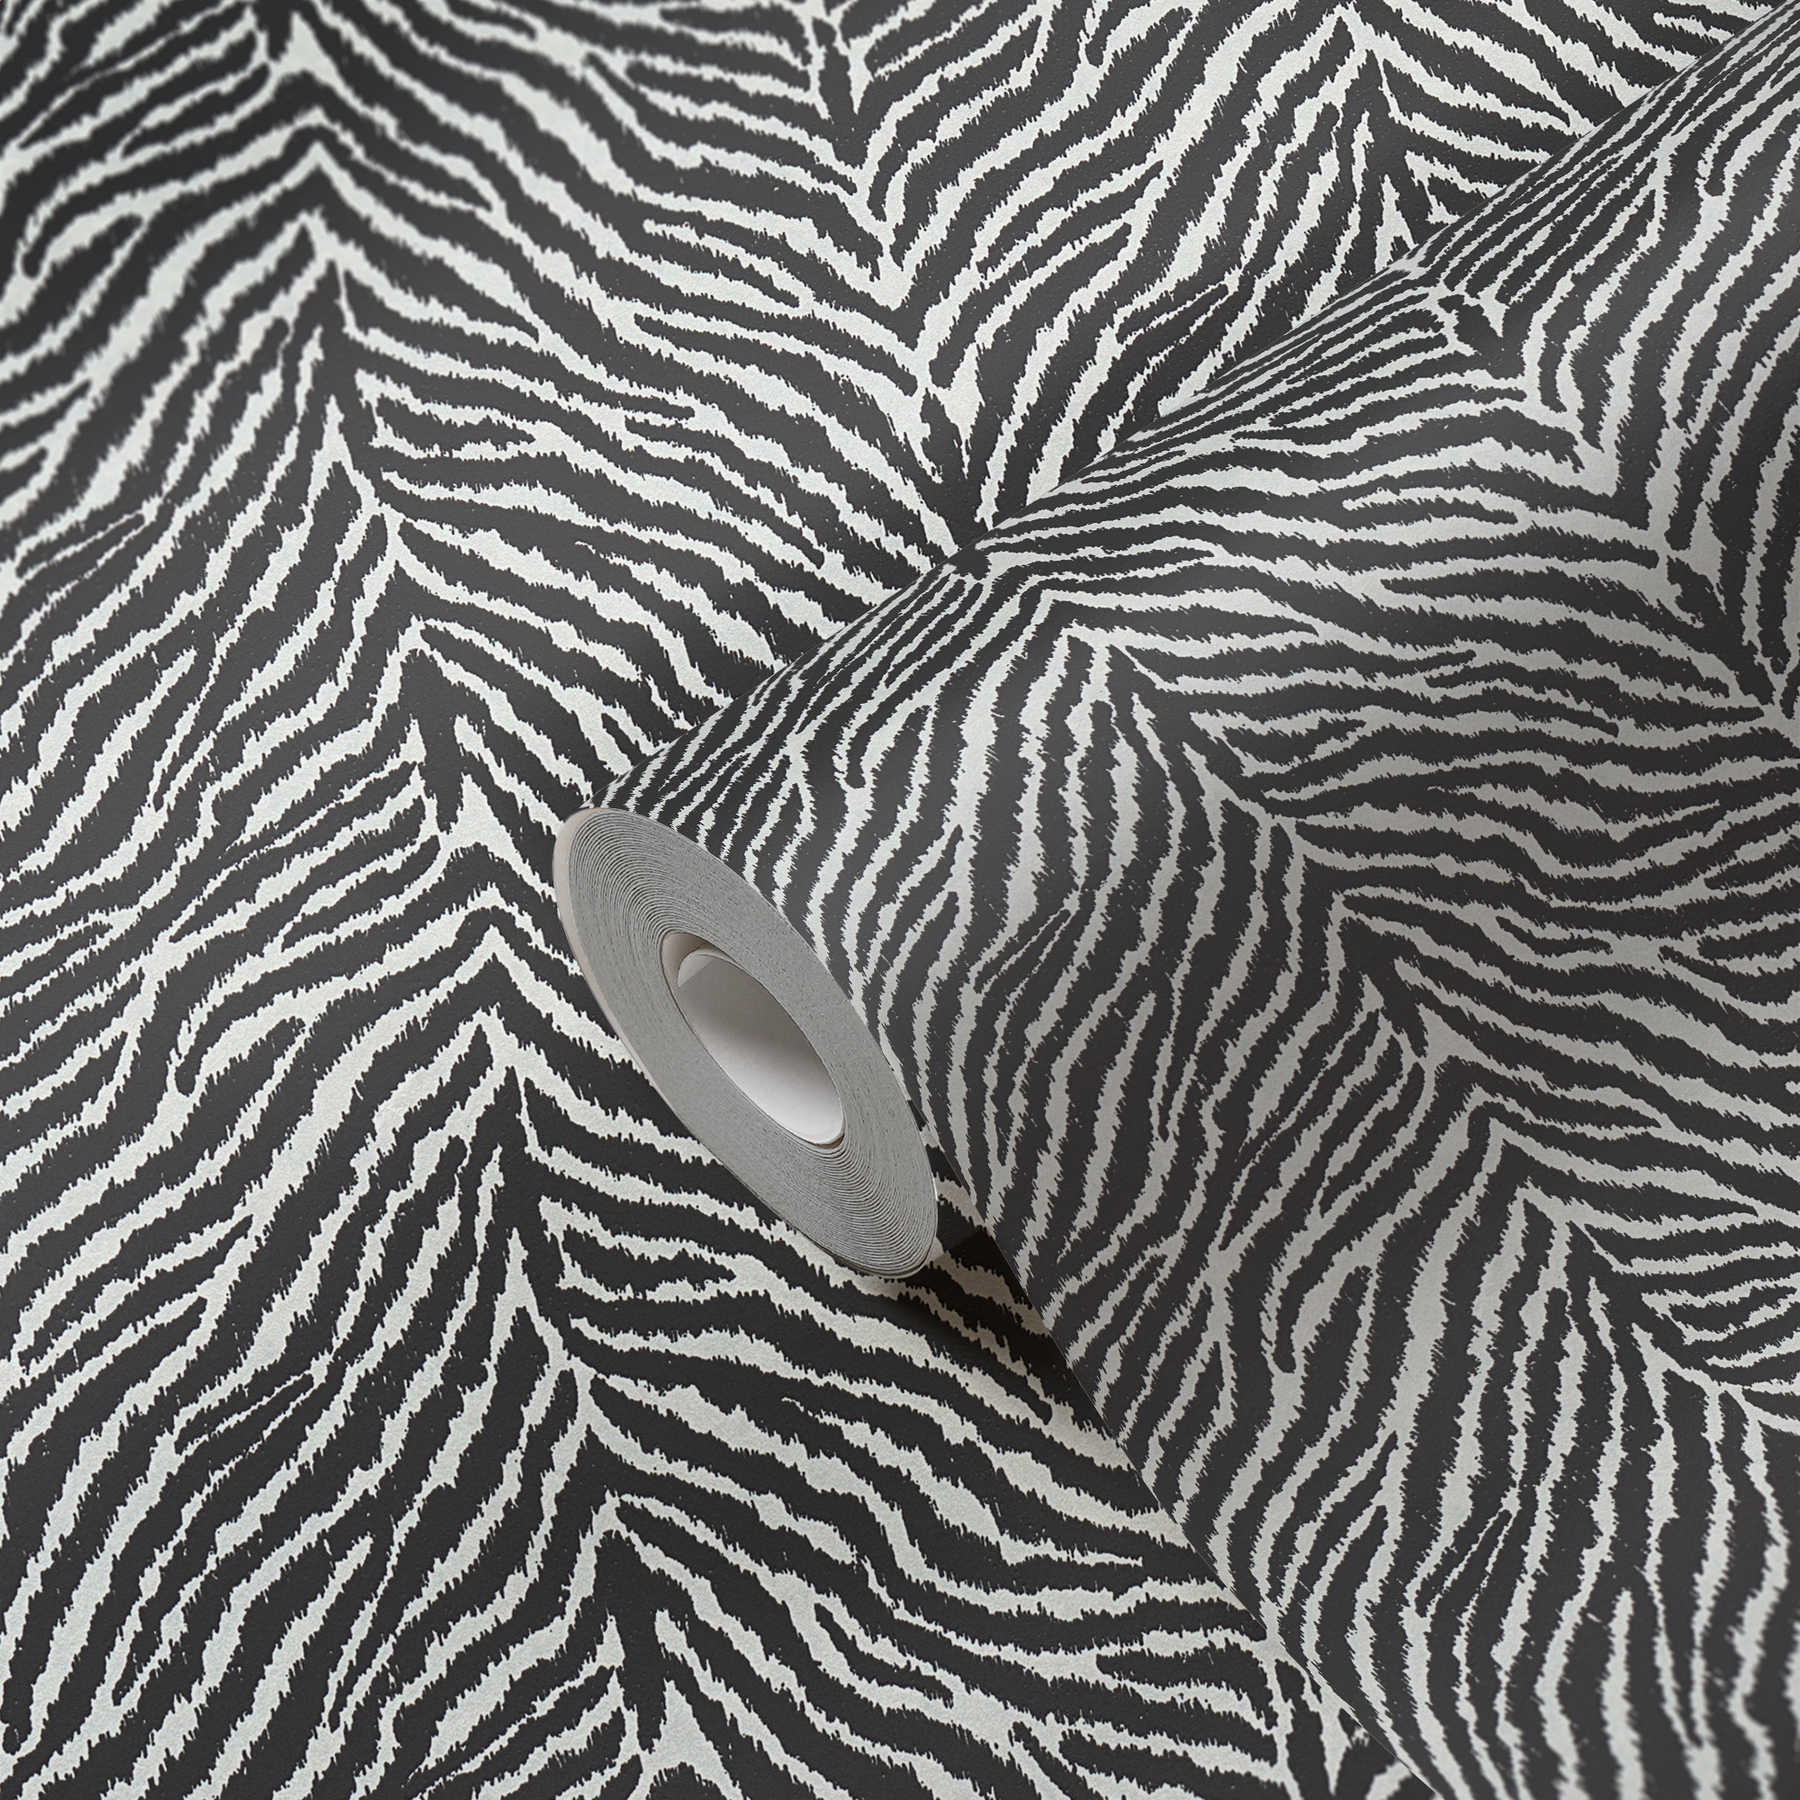             Animal Print Vliestapete Zebra-Muster – Schwarz, Weiß
        